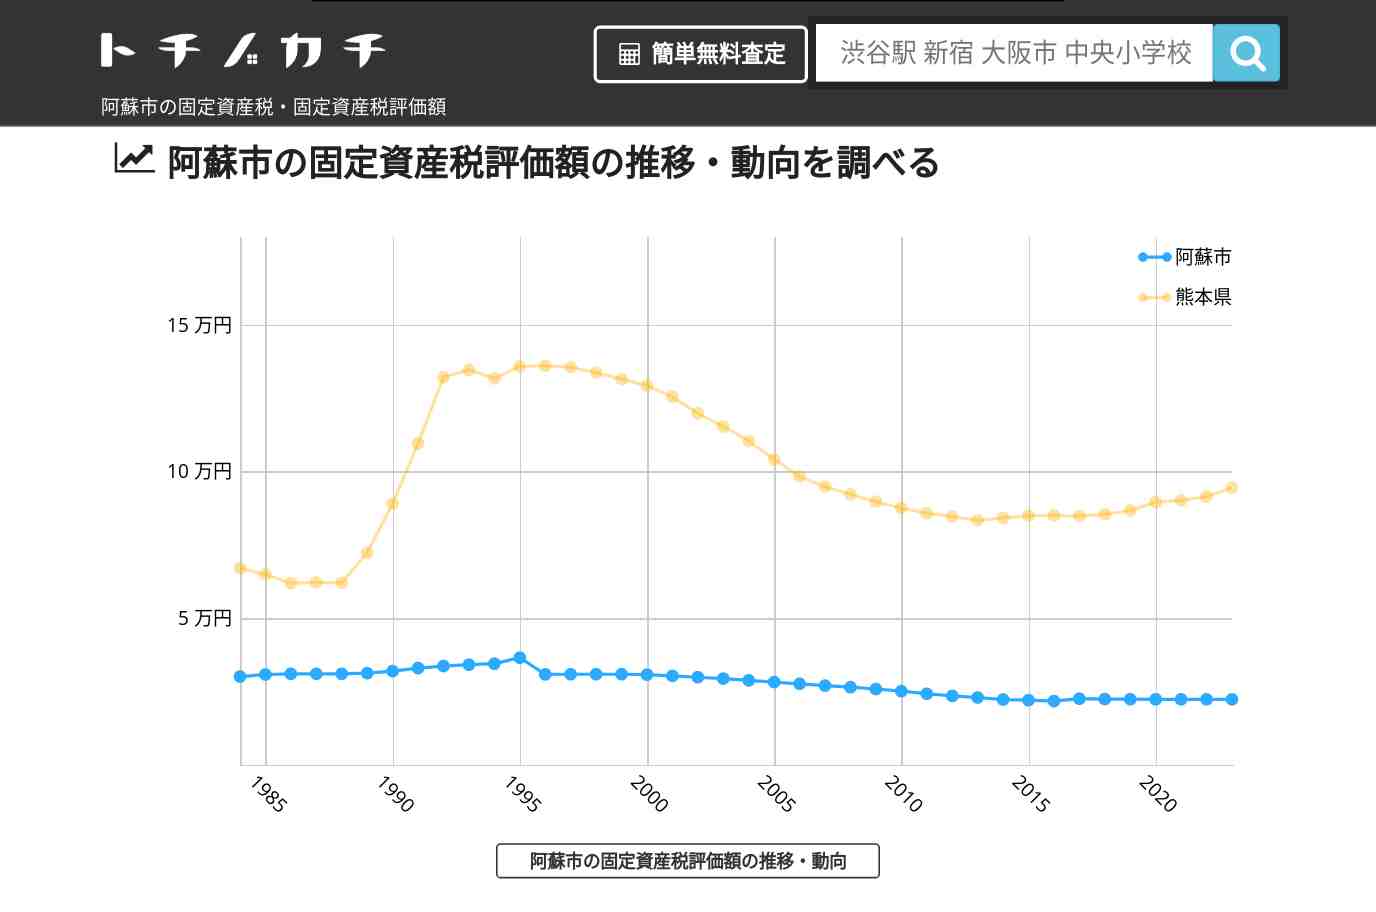 坂梨小学校(熊本県 阿蘇市)周辺の固定資産税・固定資産税評価額 | トチノカチ